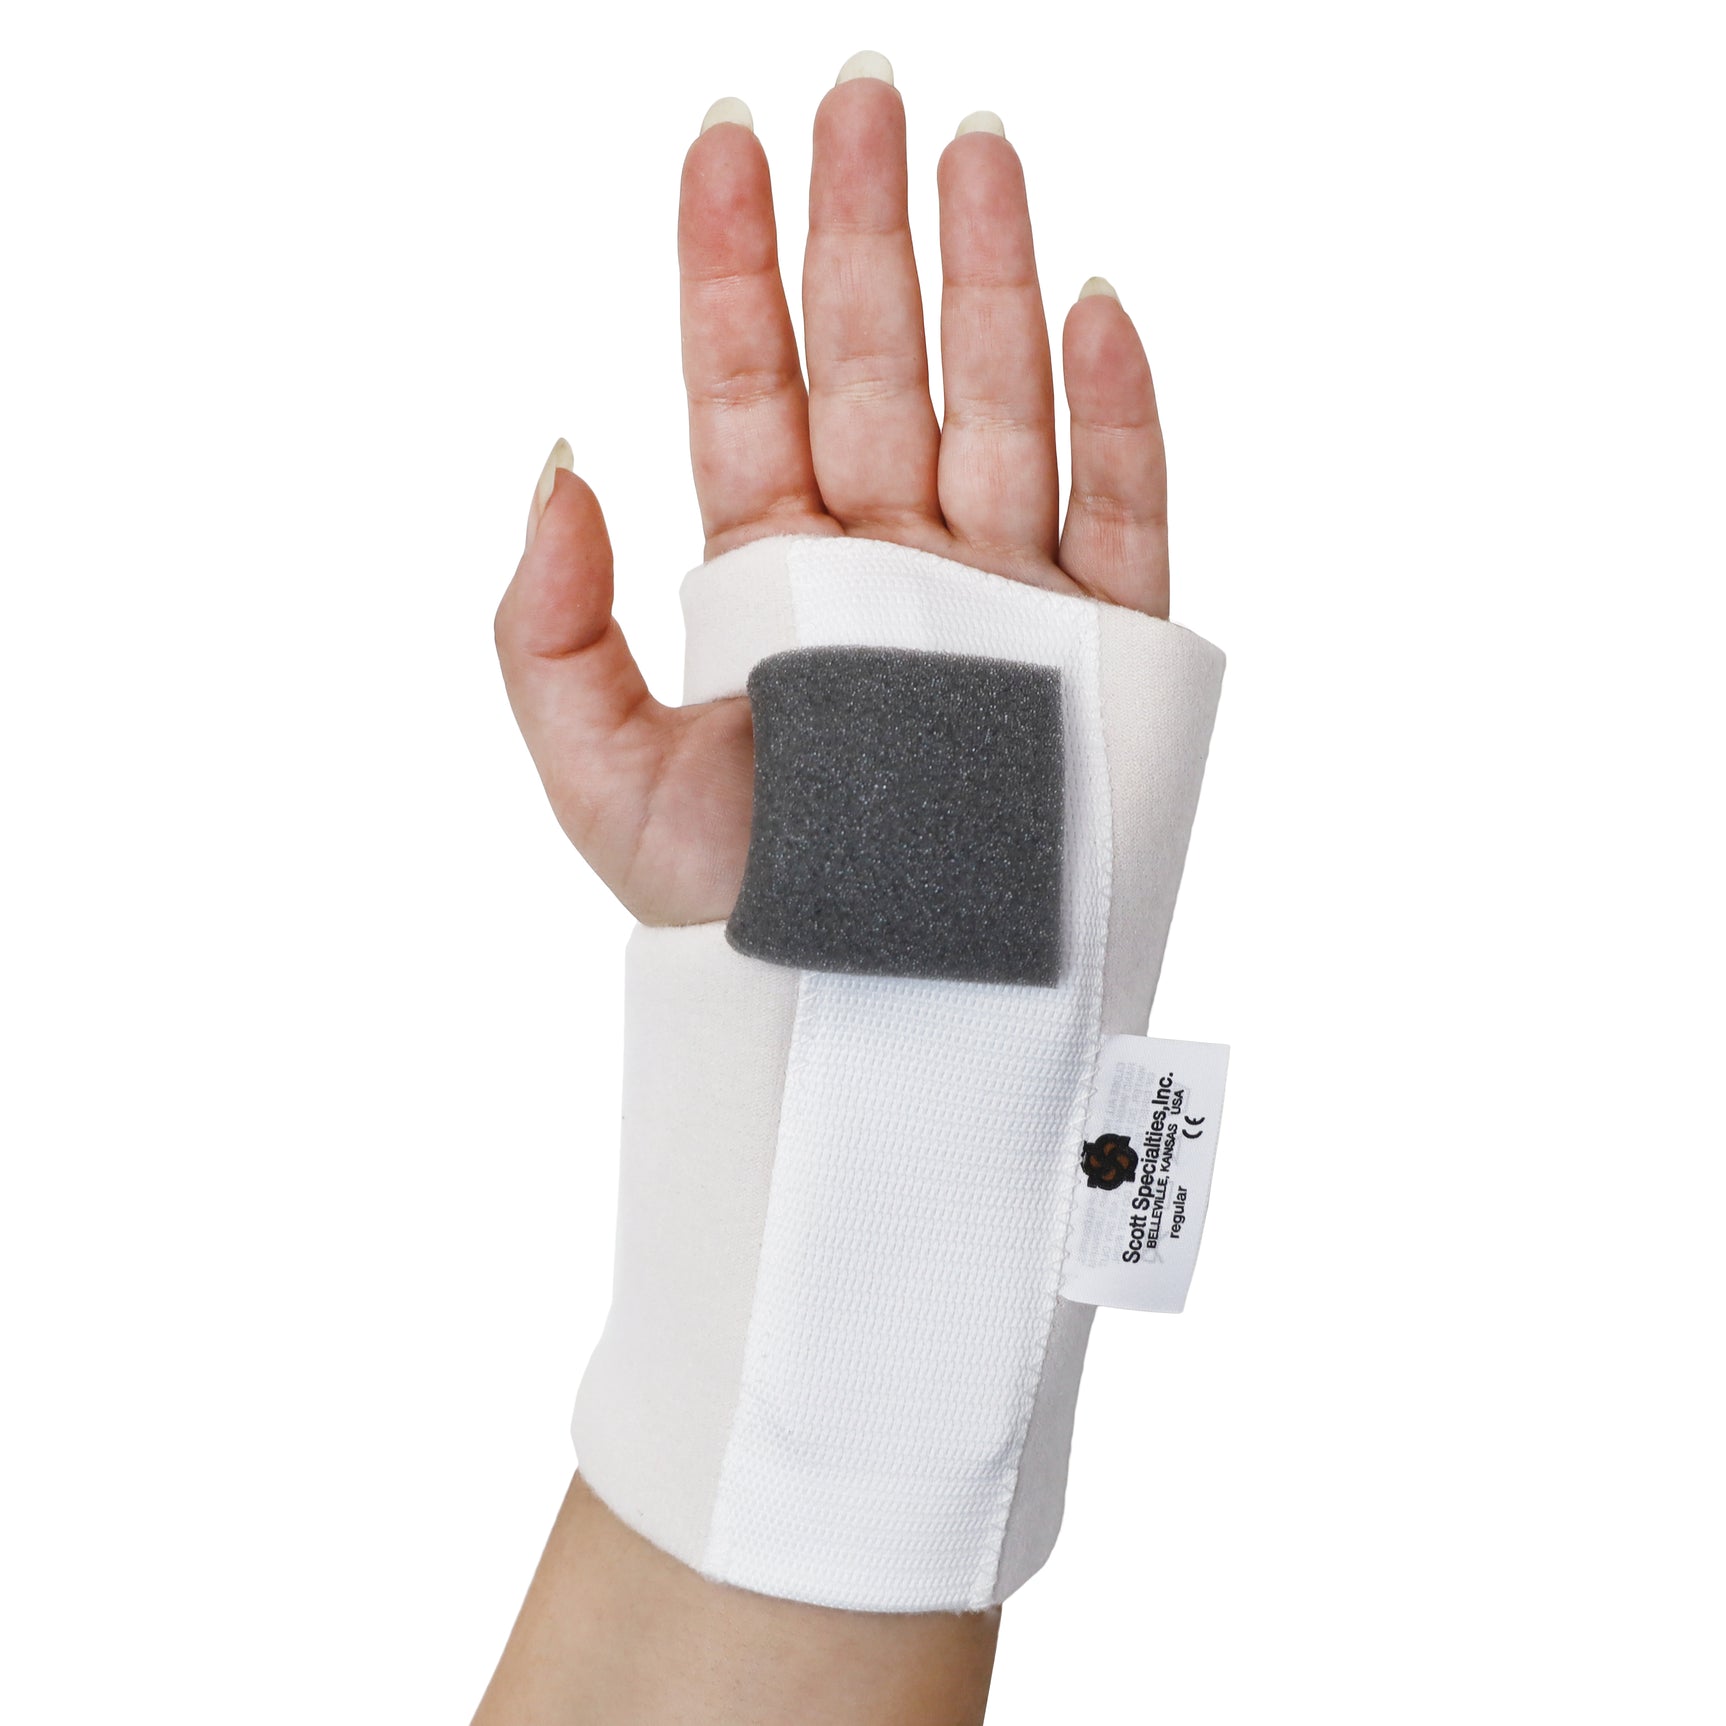 Scott Unifoam Wrist Support - Left Hand